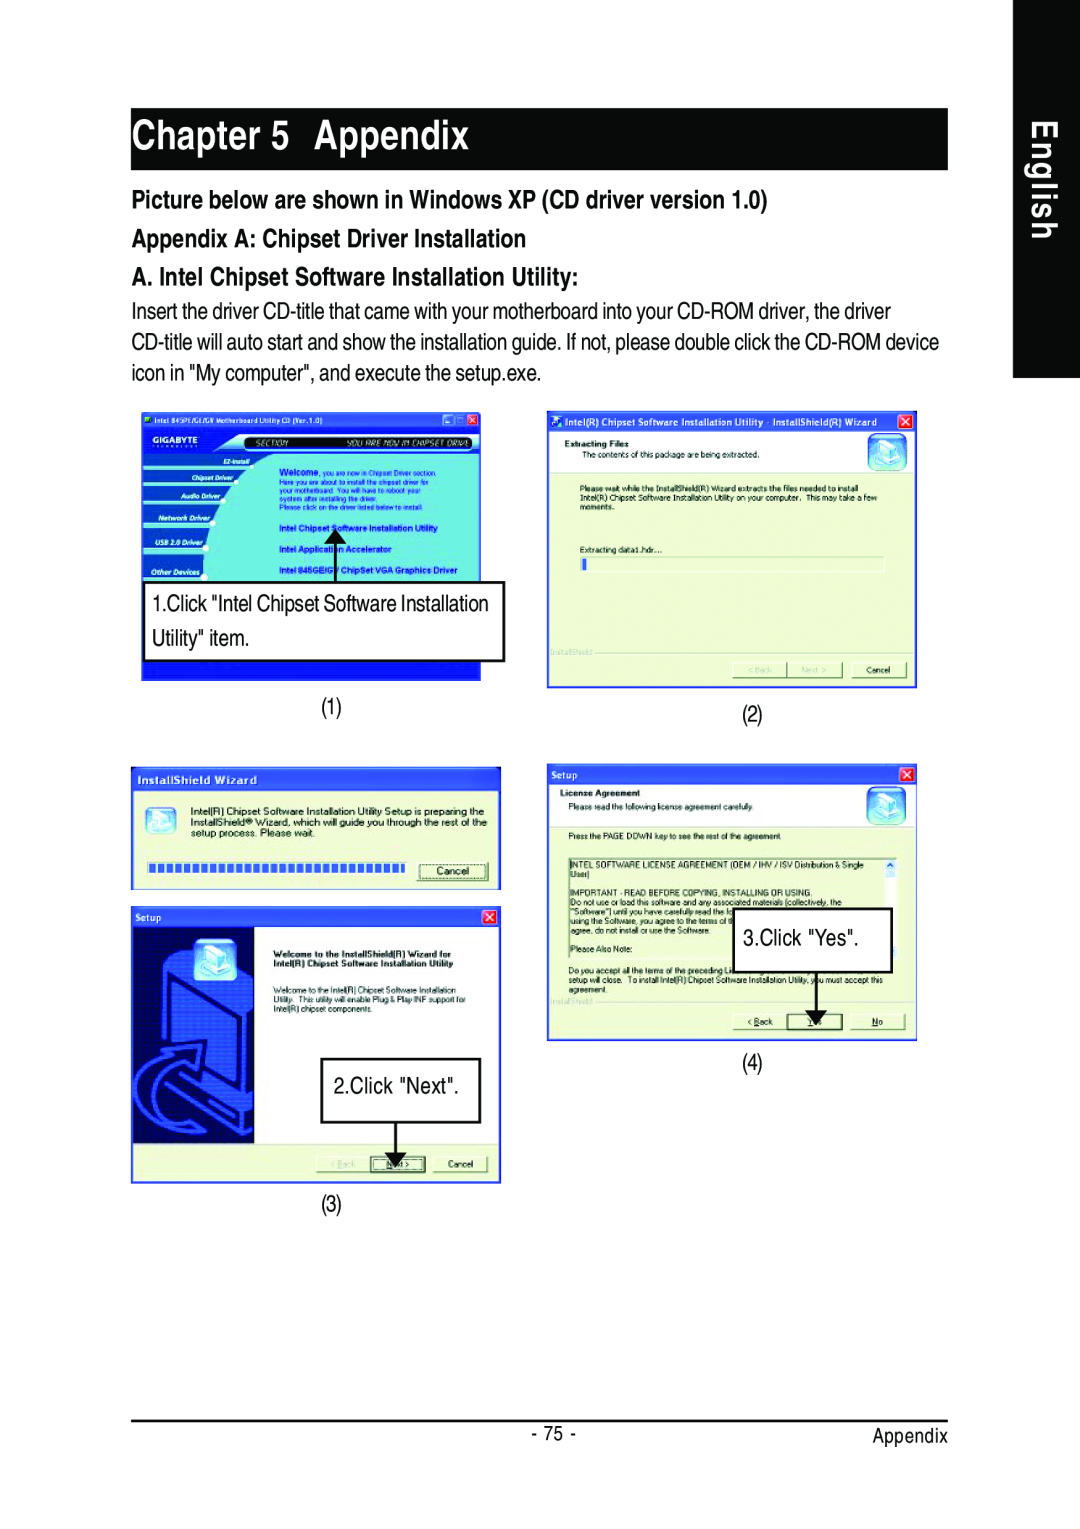 Gigabyte GA-8GEM667 manual Appendix, English, Picture below are shown in Windows XP CD driver version 